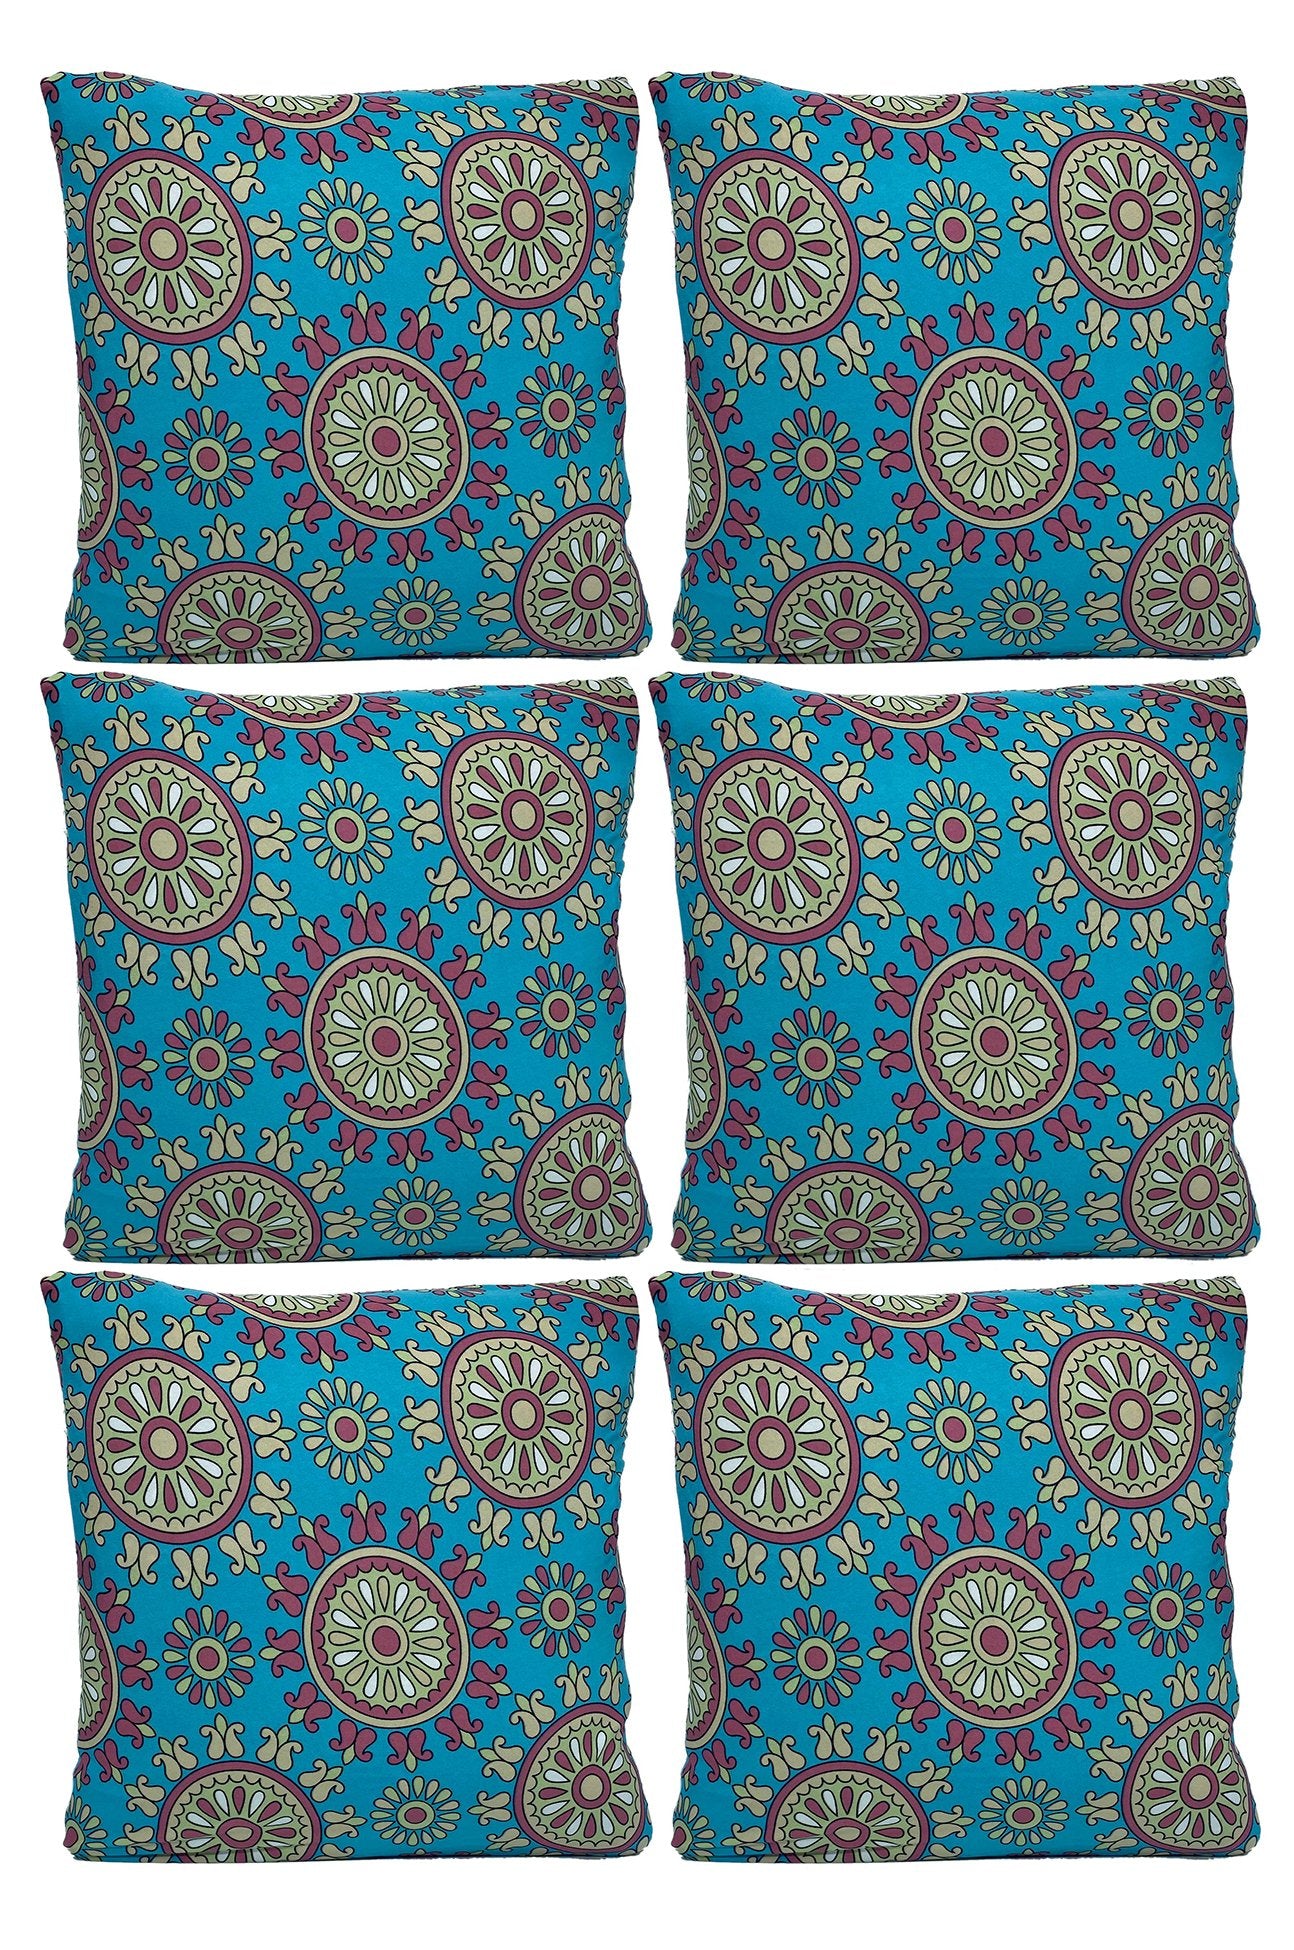 Bohemian Print Sofa Cover - Mandala Turquoise